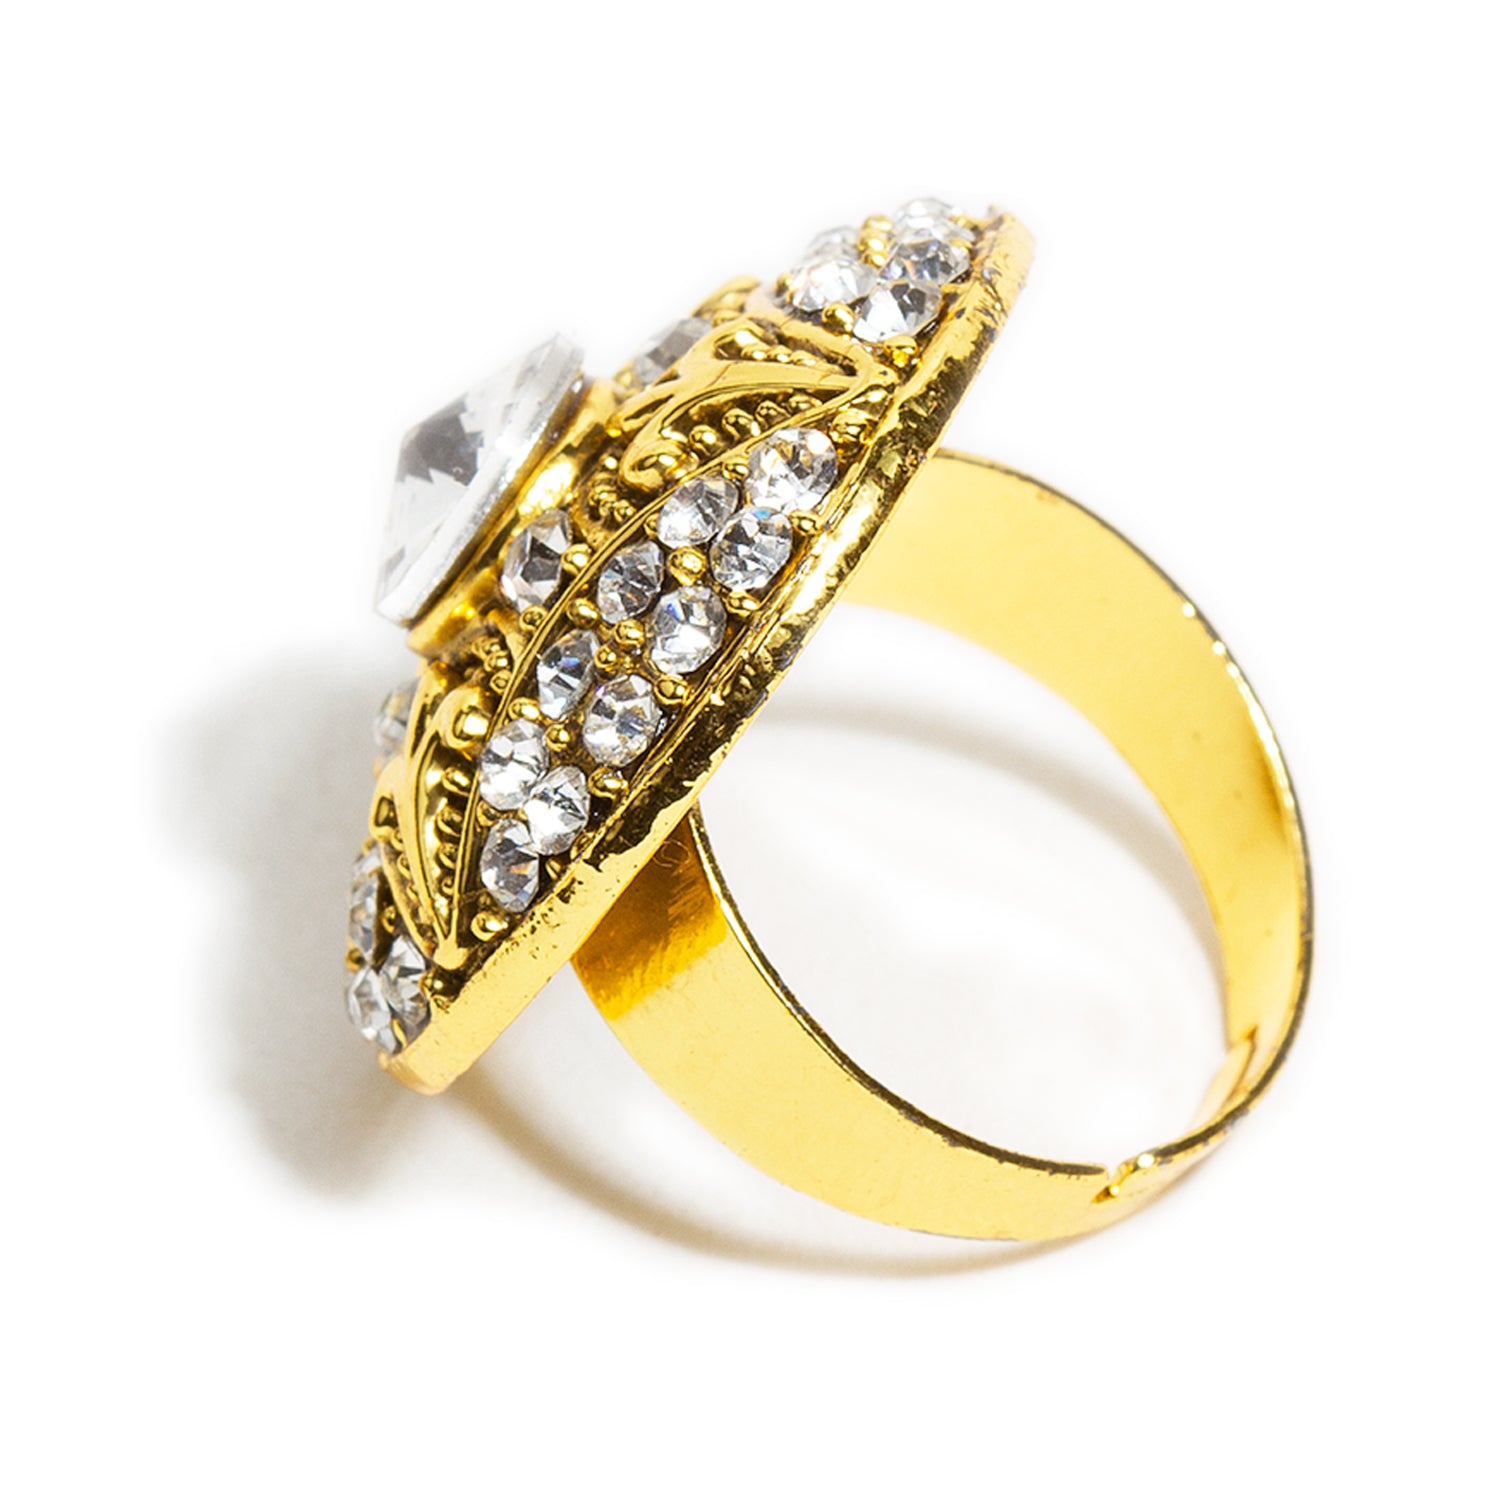 Slit Design 22 KT Gold Ring With White Stone